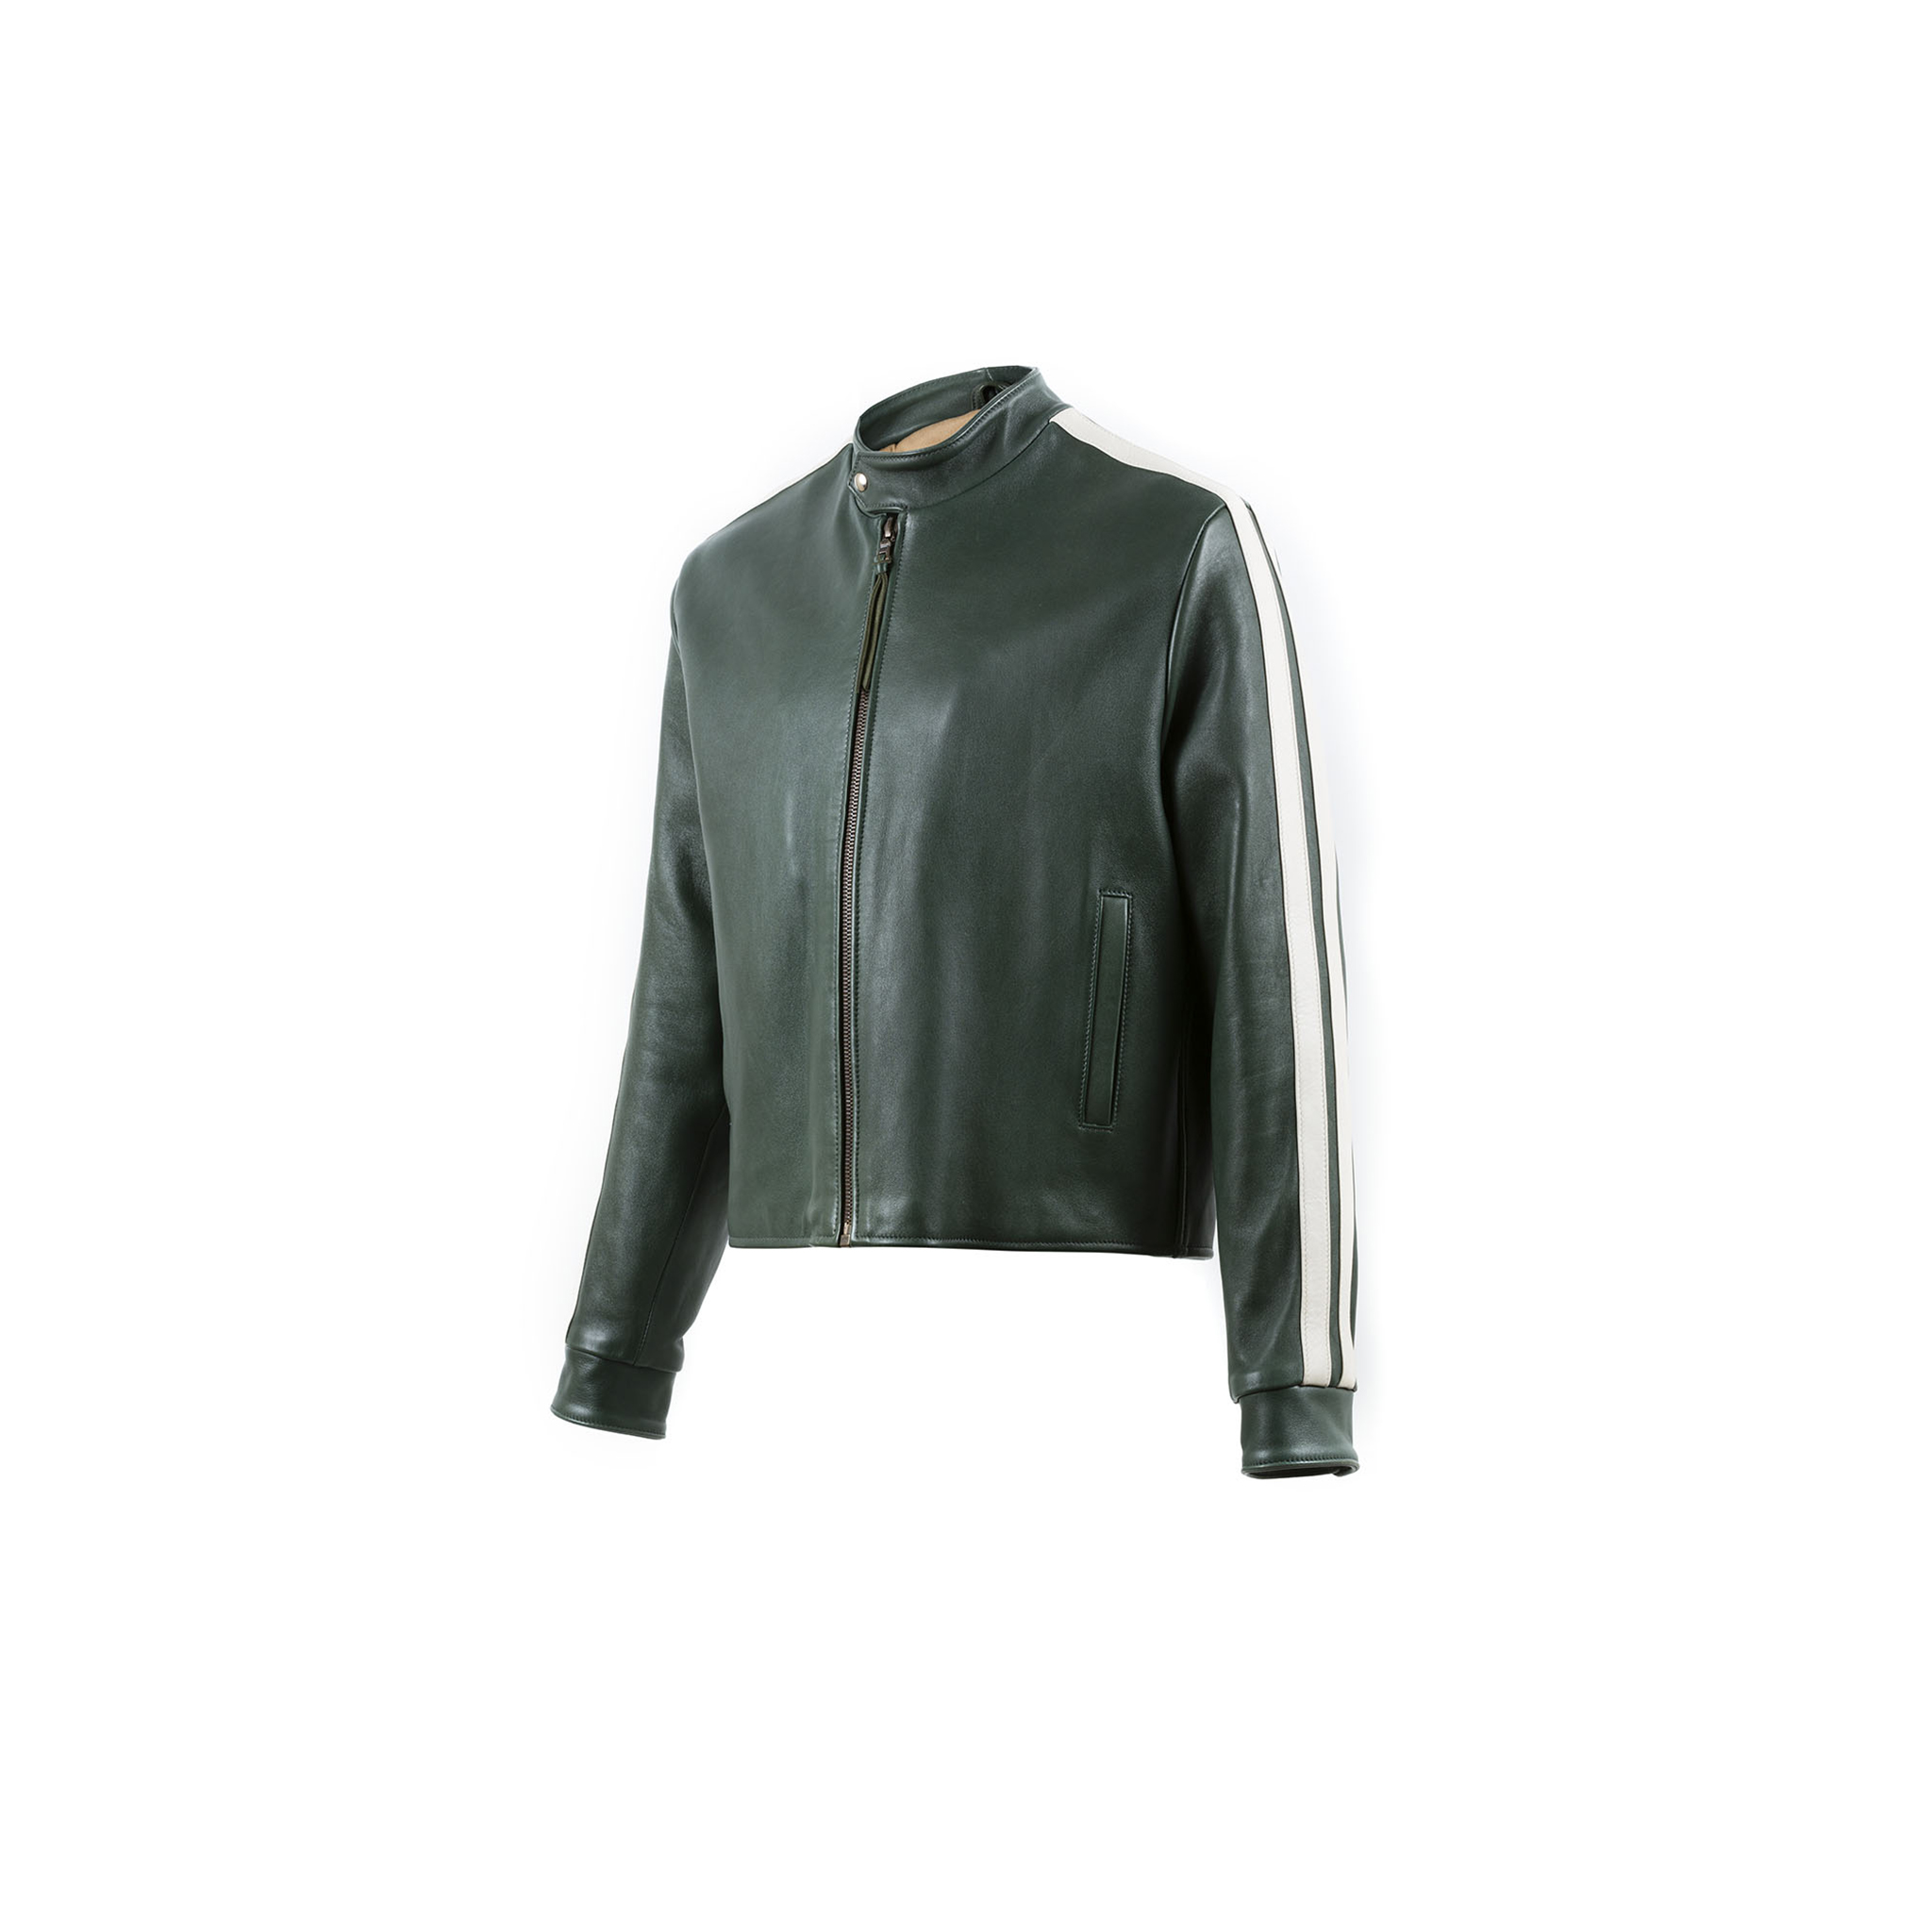 Blouson Anglais Jacket - Glossy leather - Green color - Ecru white strips